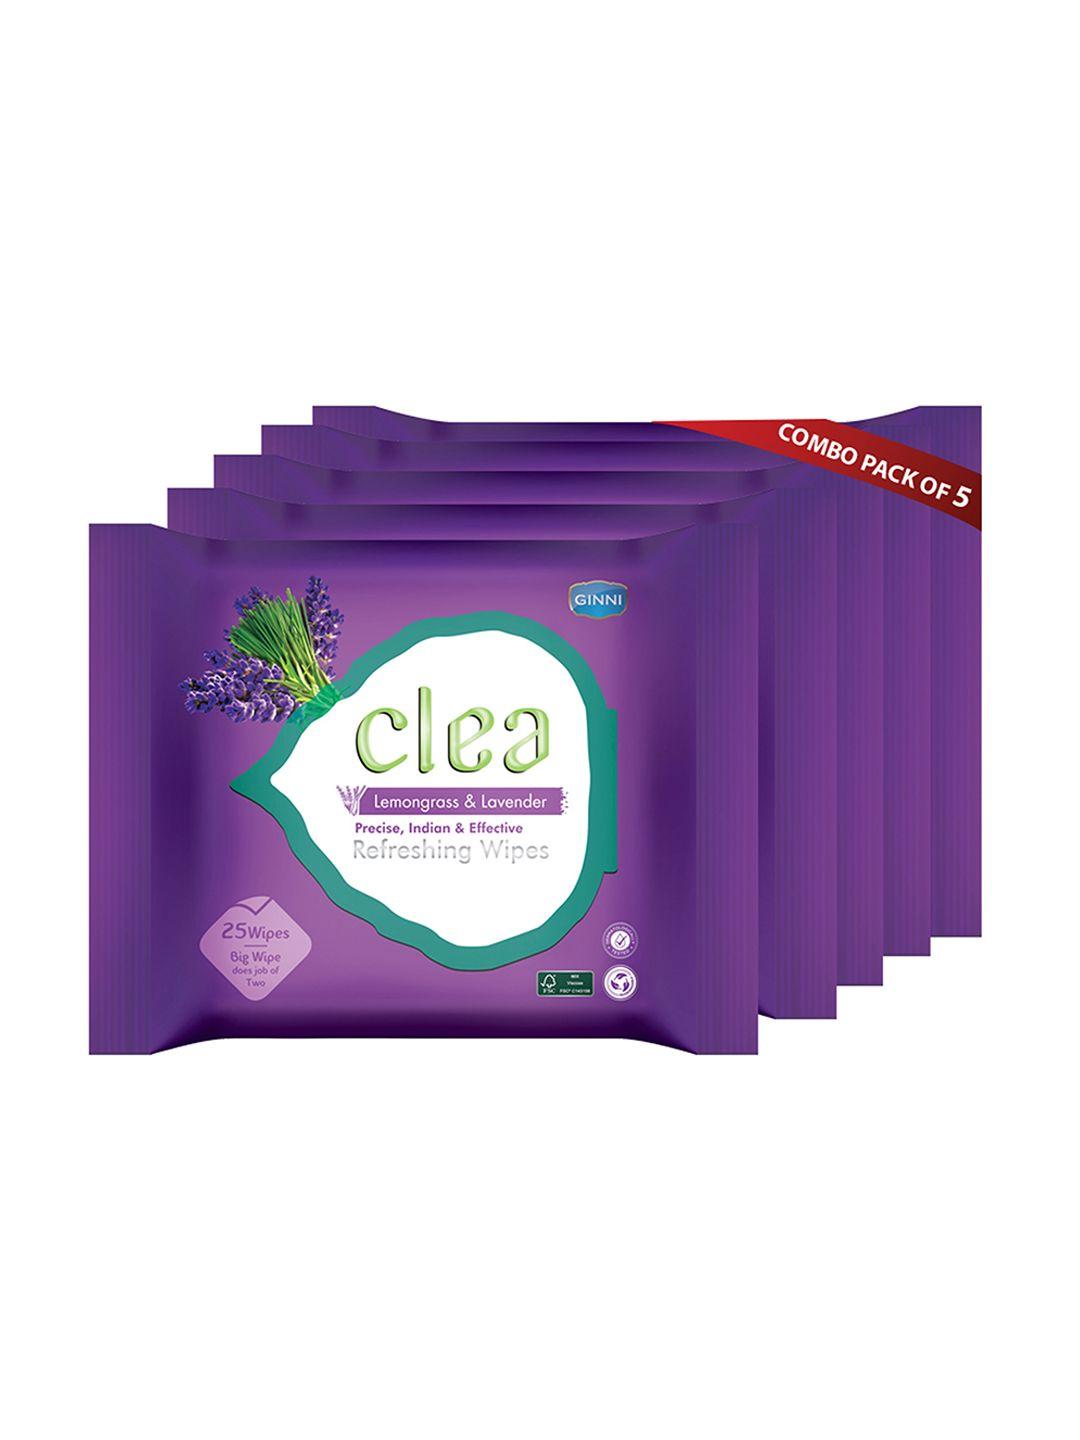 clea set of 5 lemongrass & lavender refreshing wet wipes - 25 pulls each